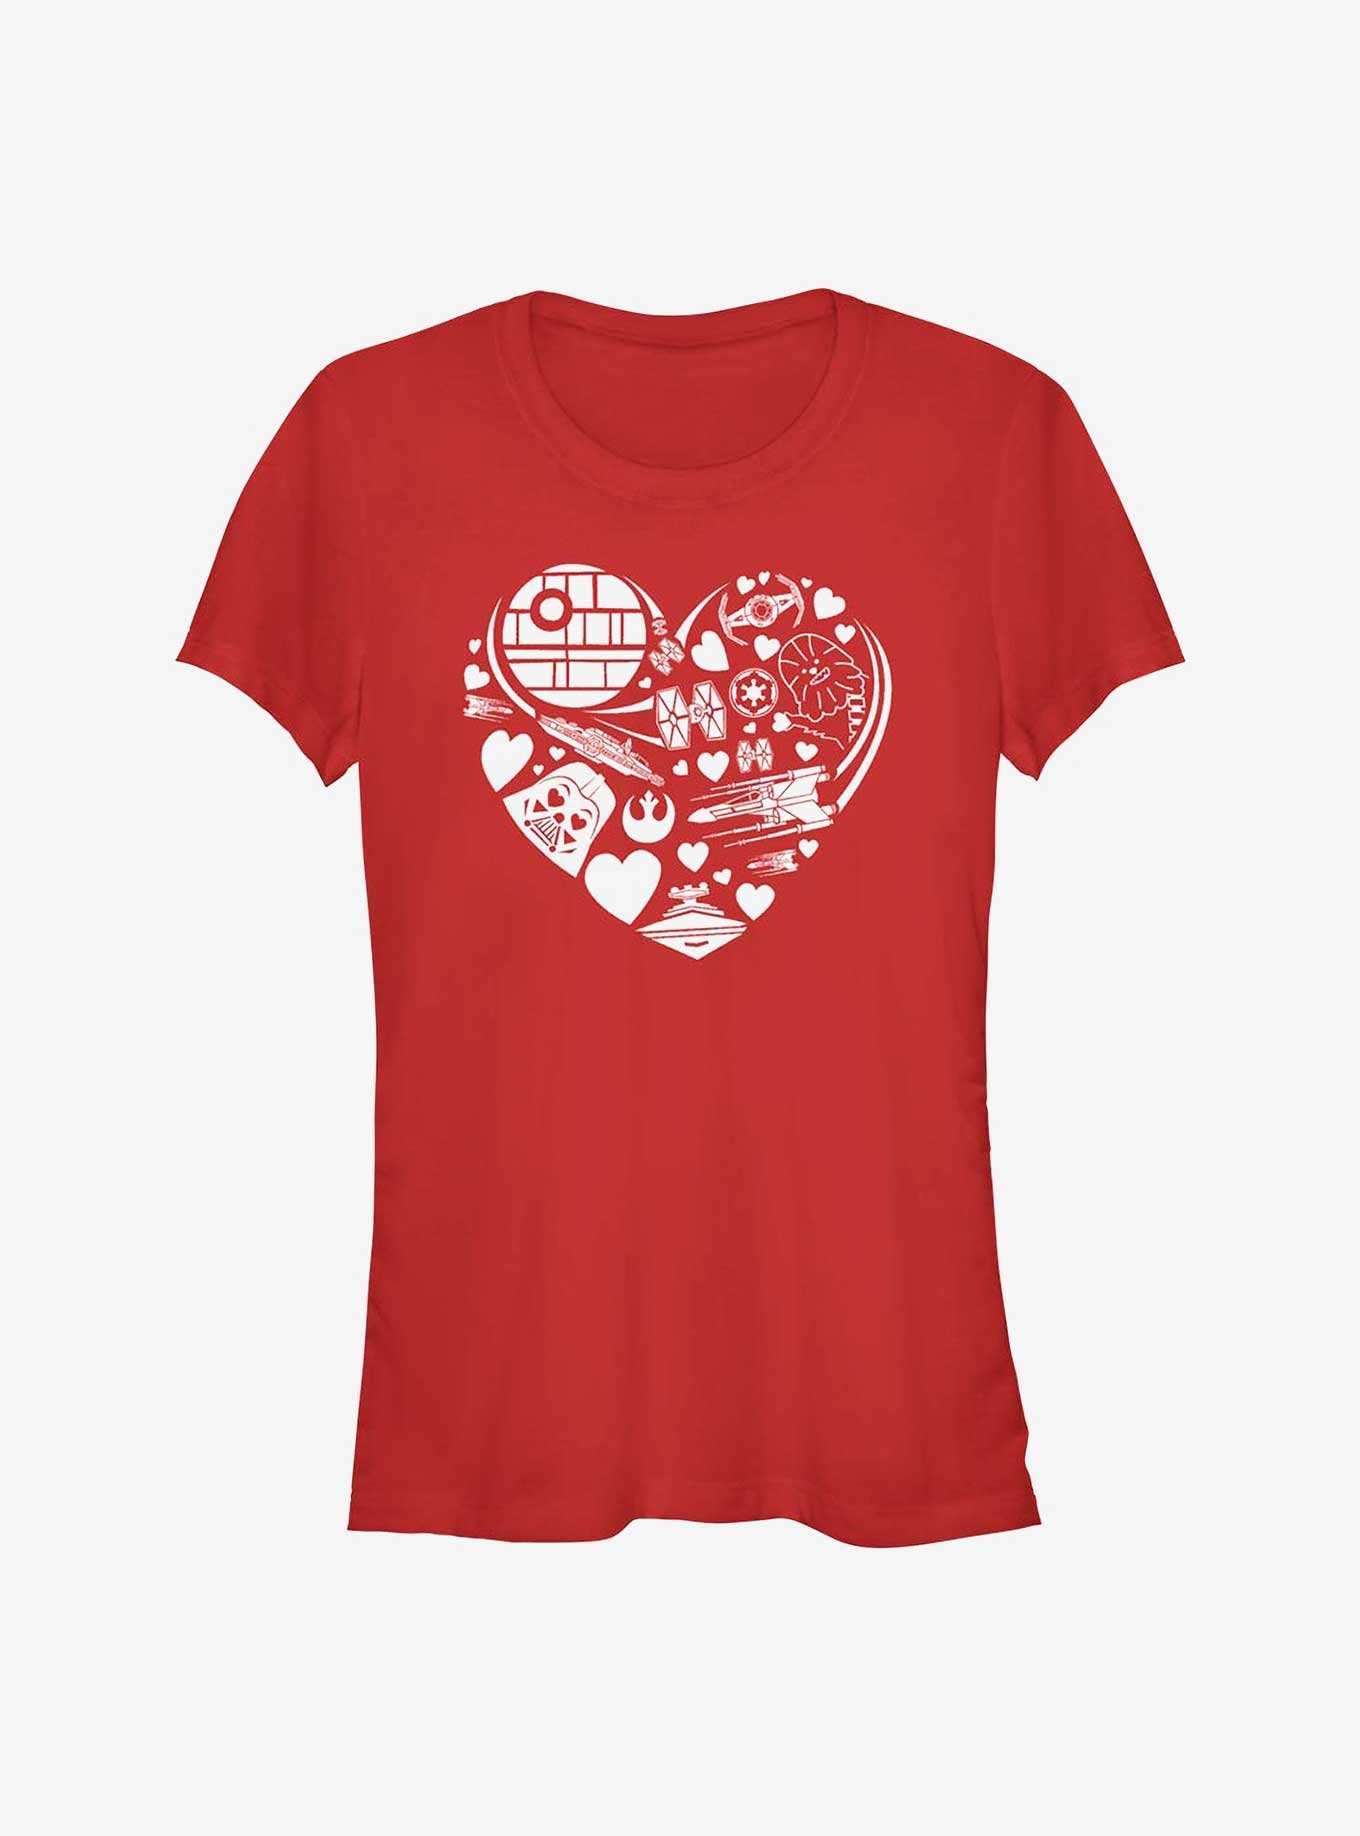 Star Wars Heart Ships Icons Girls T-Shirt, , hi-res